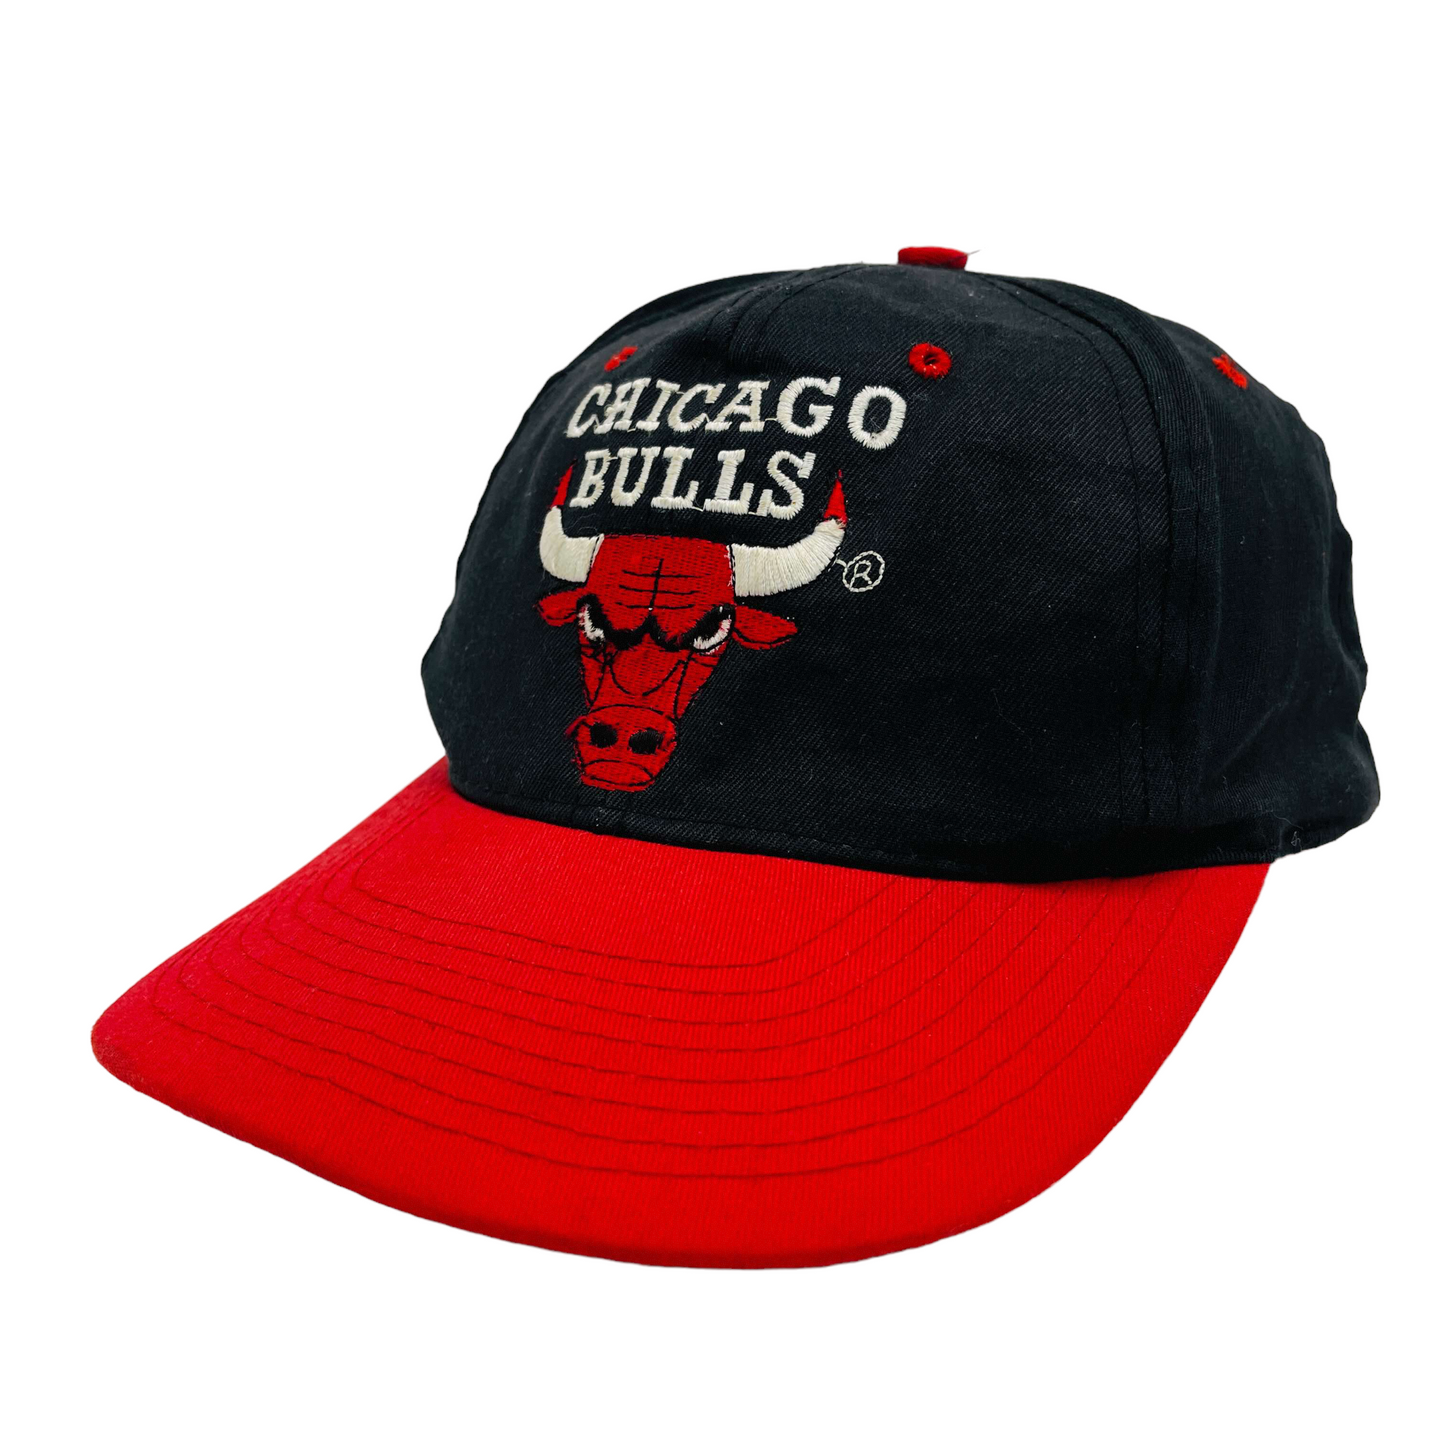 Vintage 1990s Twins NBA Chicago Bulls Snapback Cap Hat Red